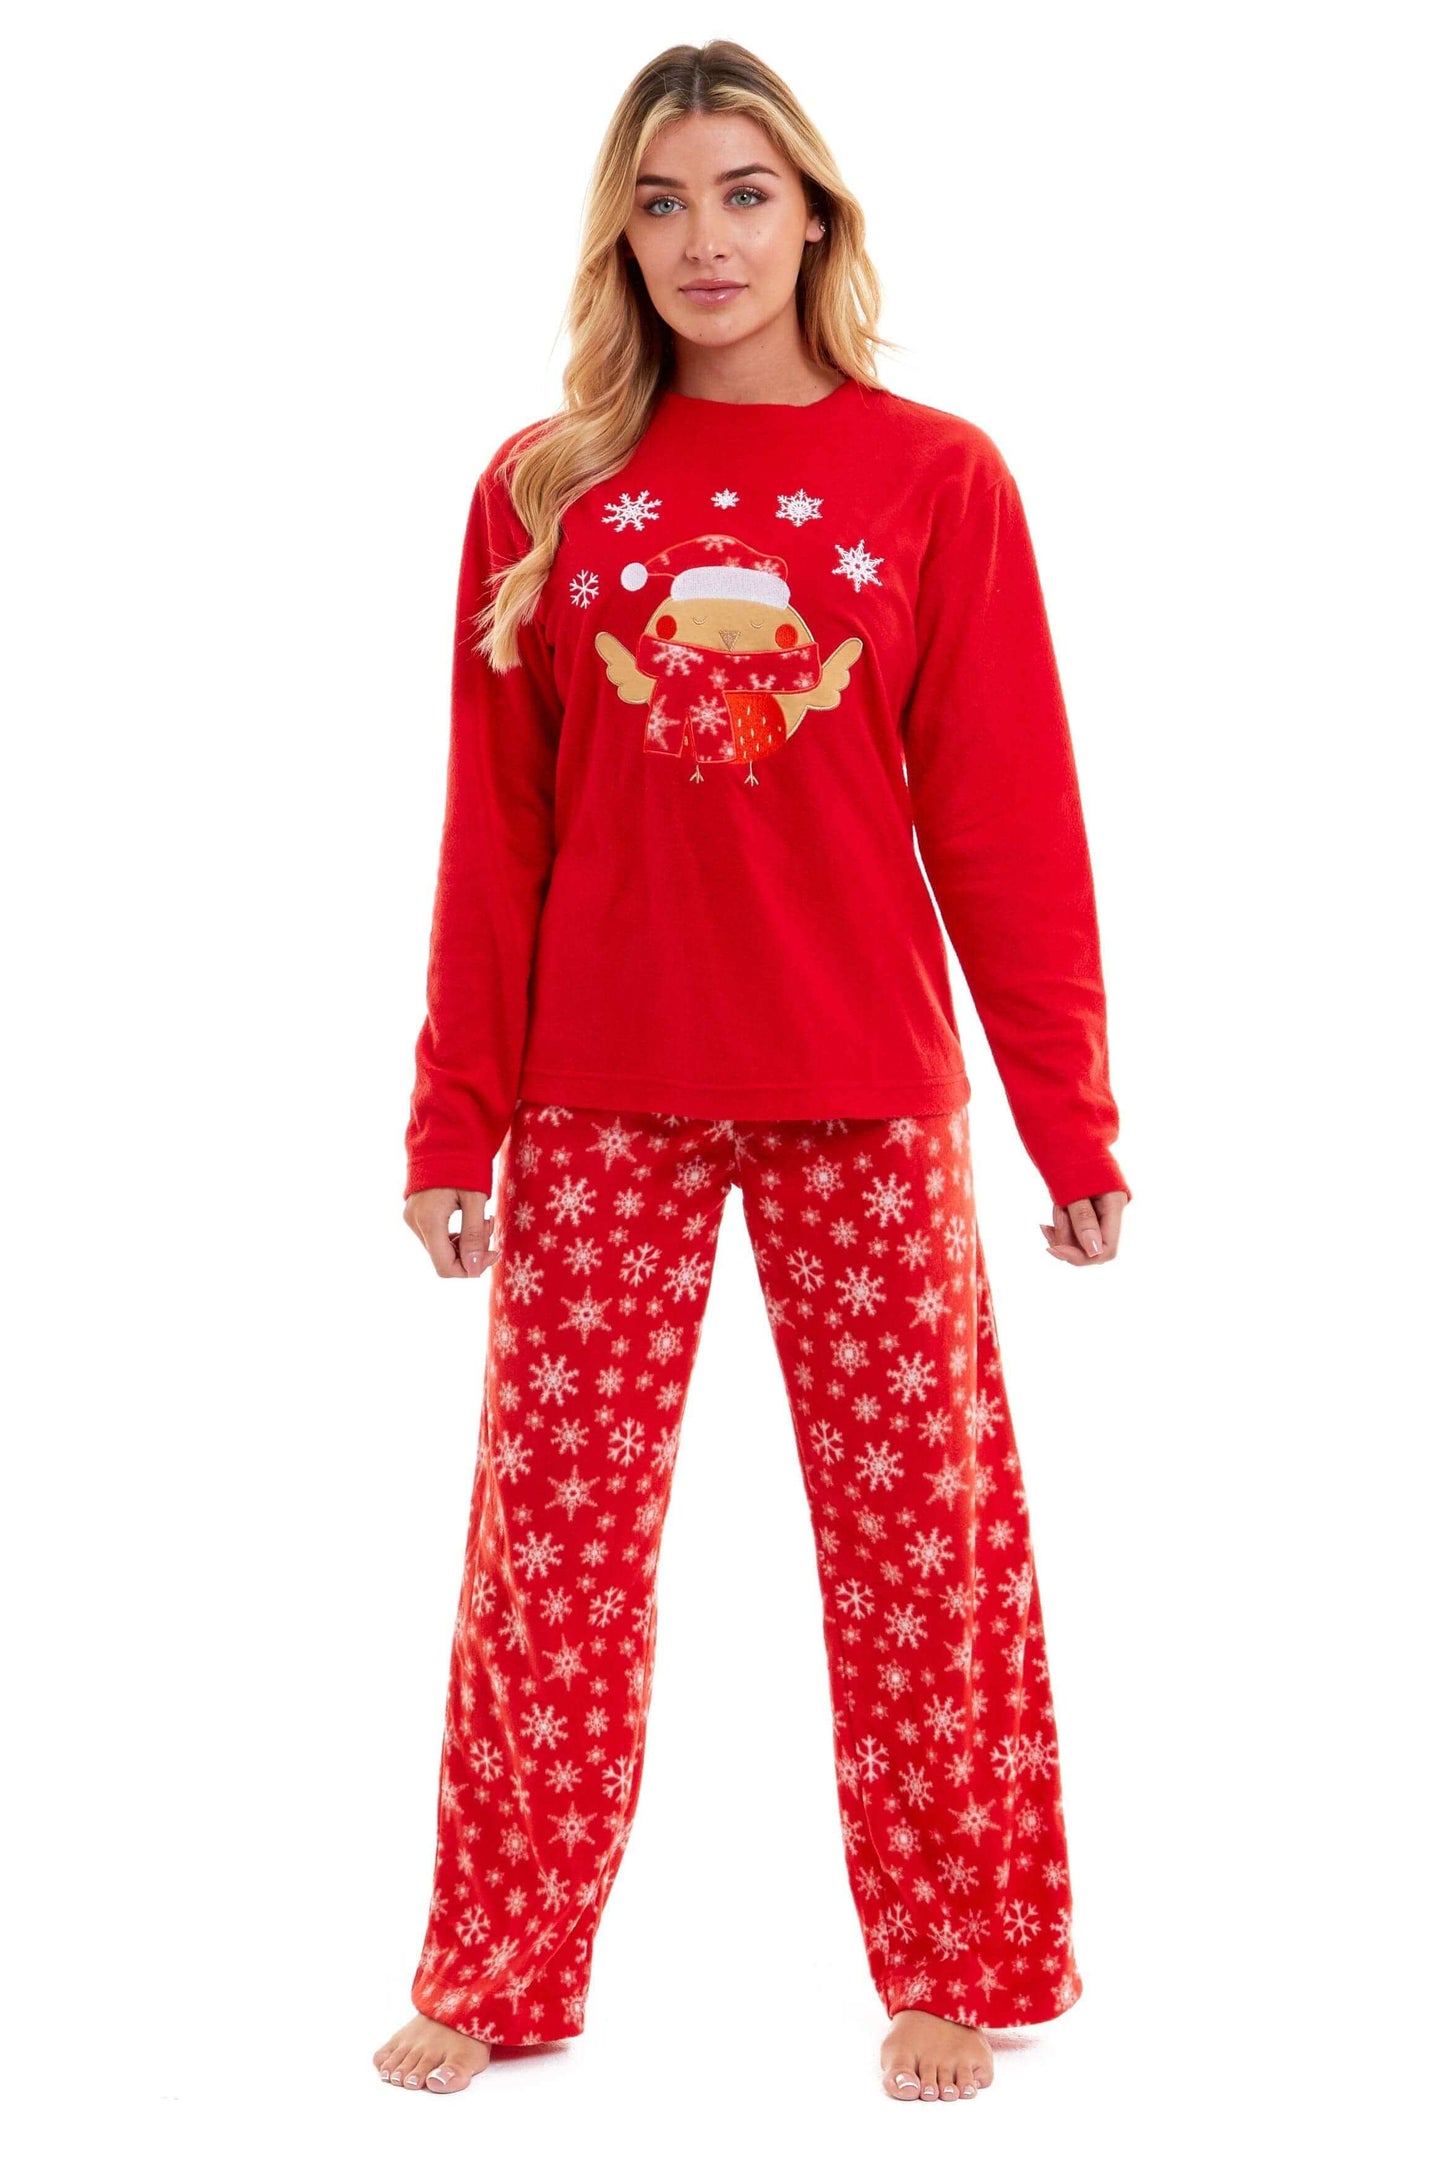 Robin Polar Fleece Pyjama Set, Cosy Everyday Loungewear, Christmas Gift Idea. Buy now for £17.00. A Pyjamas by Daisy Dreamer. 12-14, 16-18, 18-20, 8-10, animal, bird, christmas, daisy dreamer, festive, fleece, gift, ladies, long sleeve, loungewear, nightw